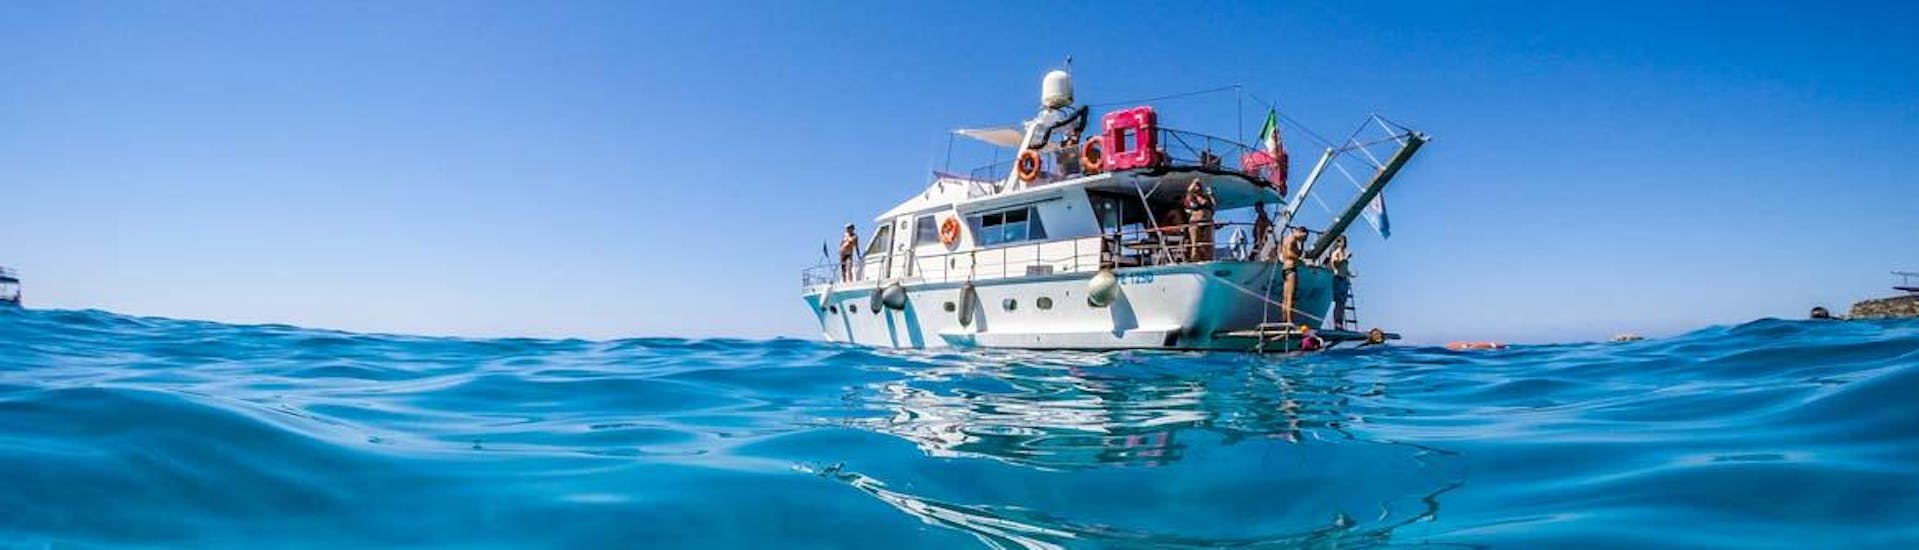 Scaitu Mia Boat during day trip to Lampedusa from Sciatu Mia Lampedusa.